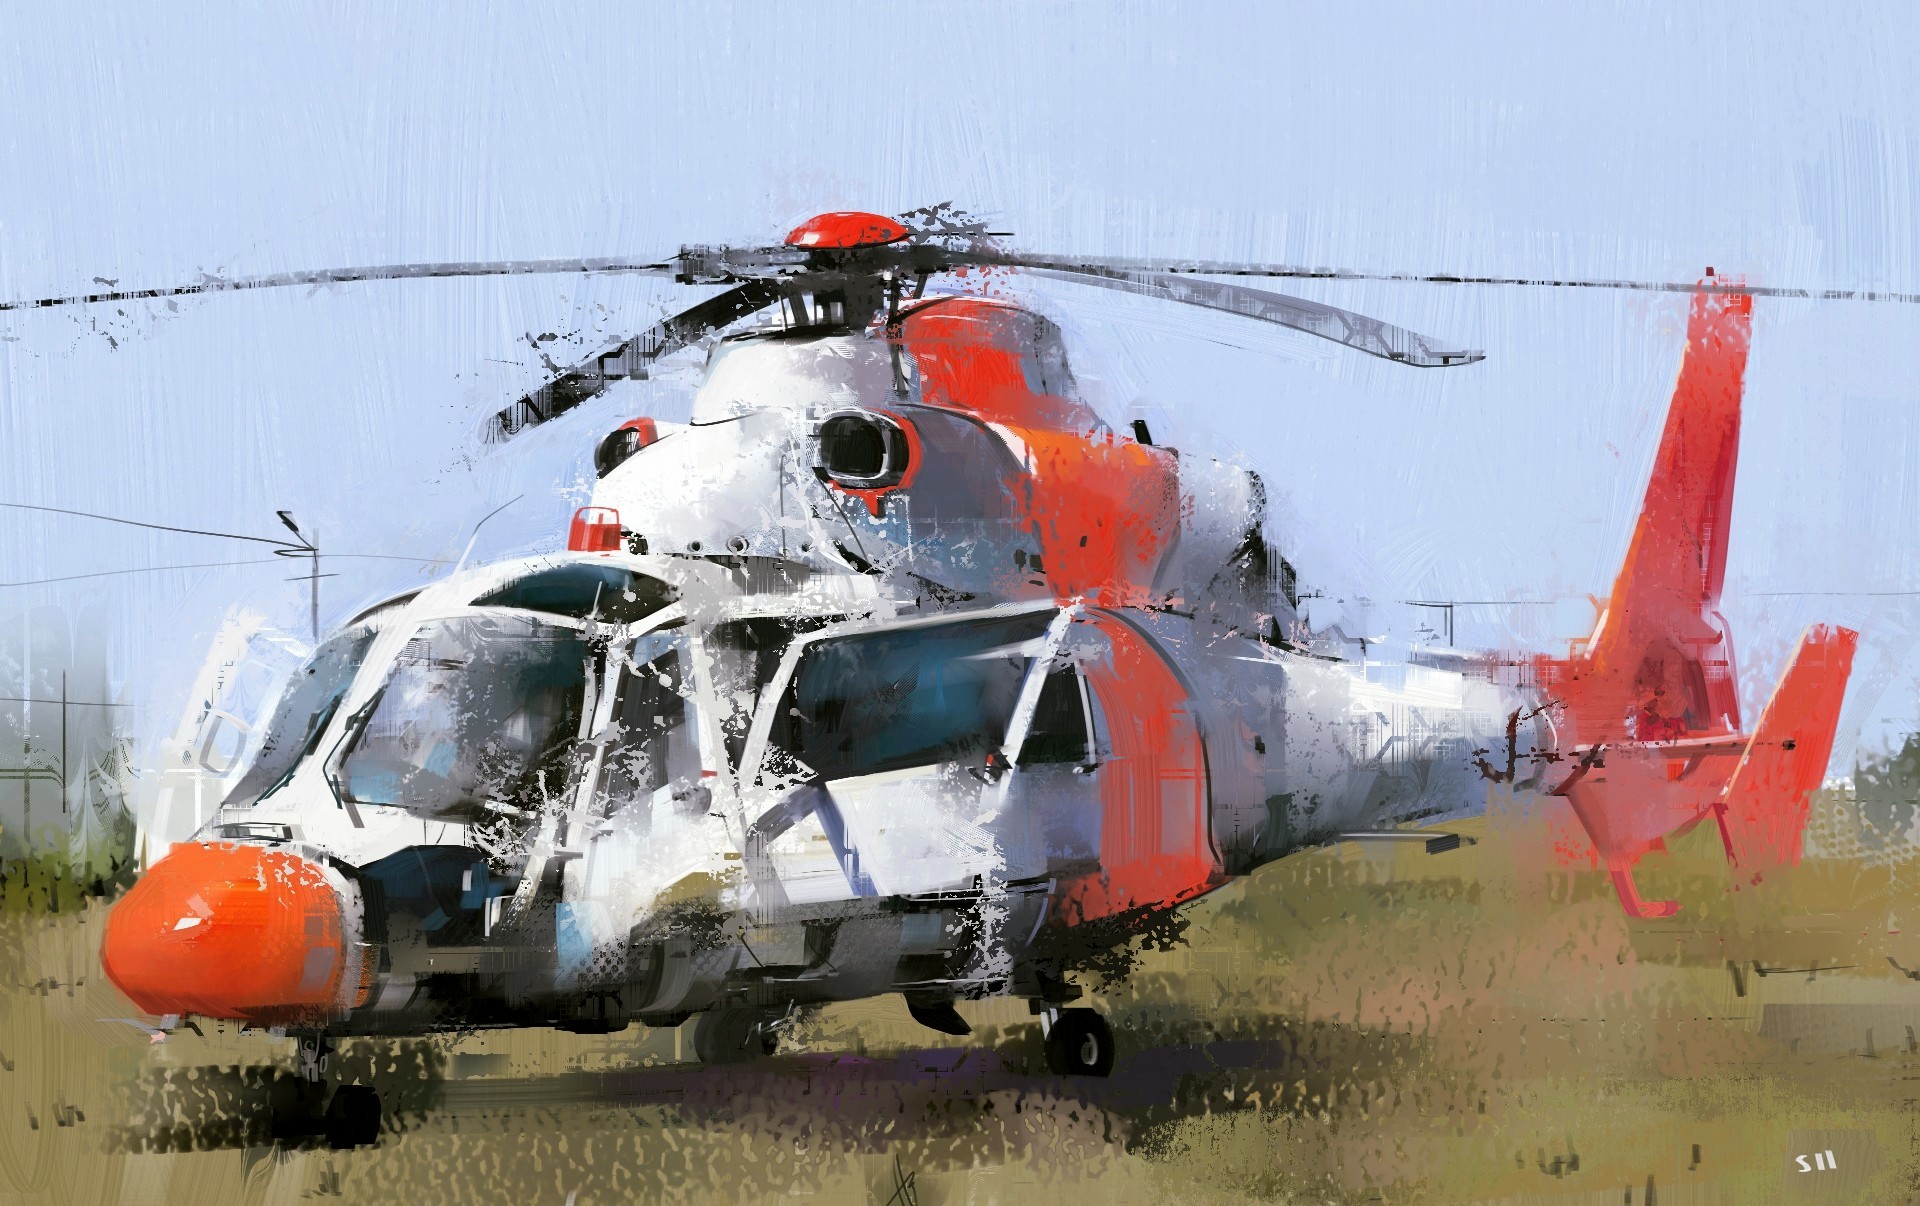 General 1920x1206 helicopters artwork digital art painting 2D ShuoLin Liu illustration vehicle